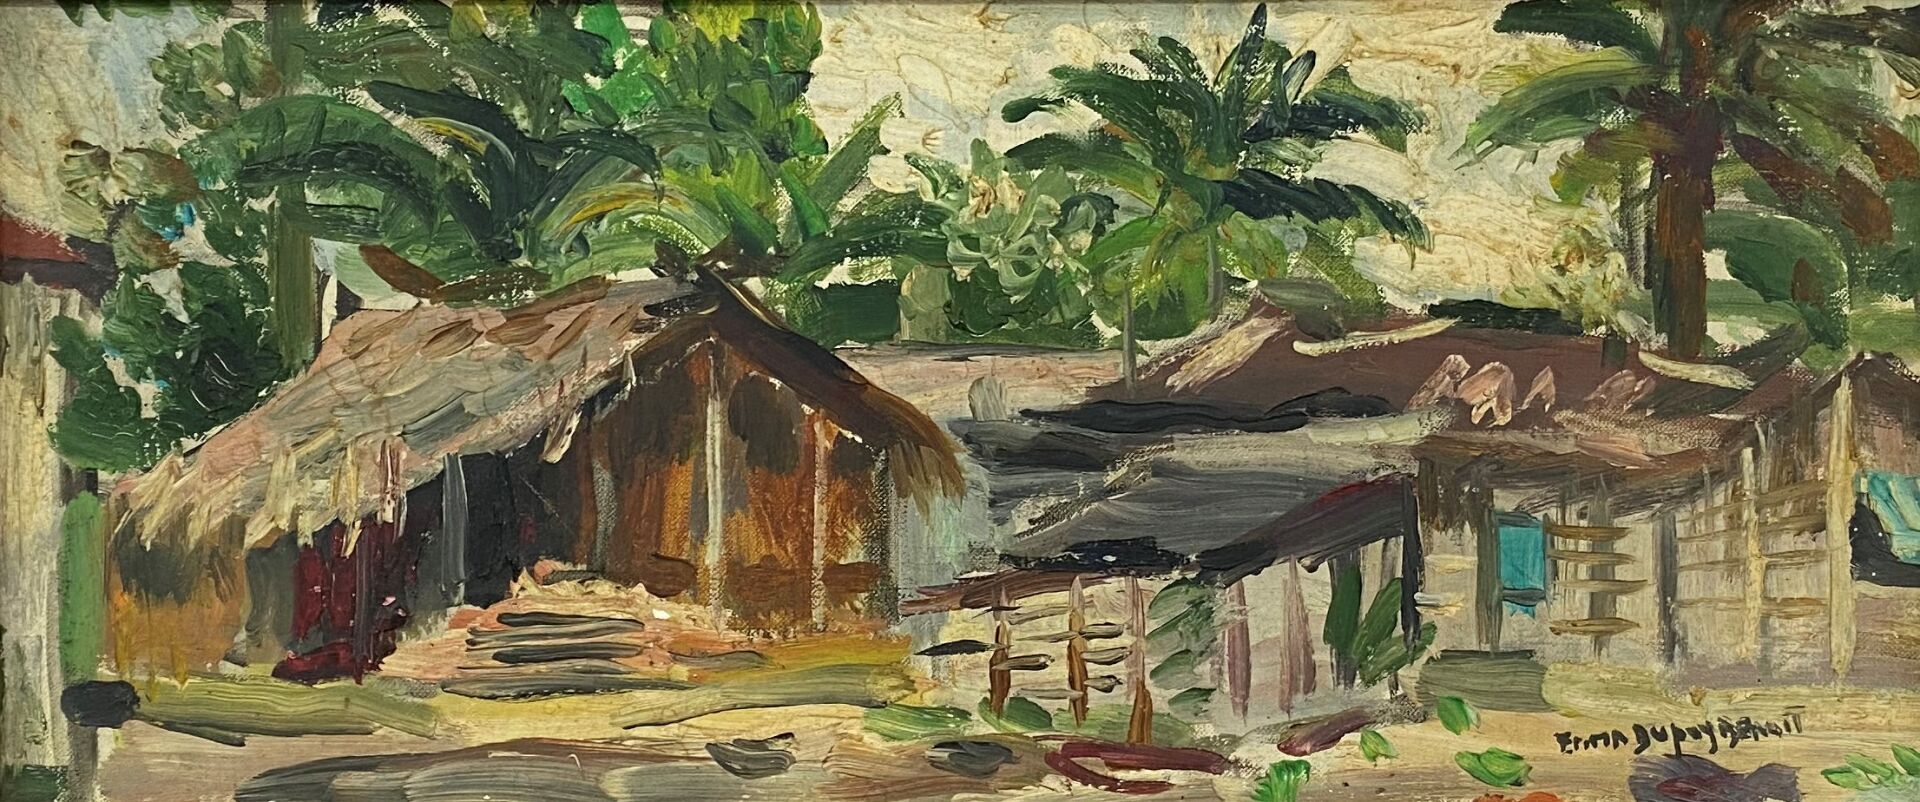 Null 艾玛-杜普伊-贝诺特（第二十期）

喀麦隆的村庄

布面油画，右下角有签名

背面有副署，日期为1939-40年

15 x 33 cm